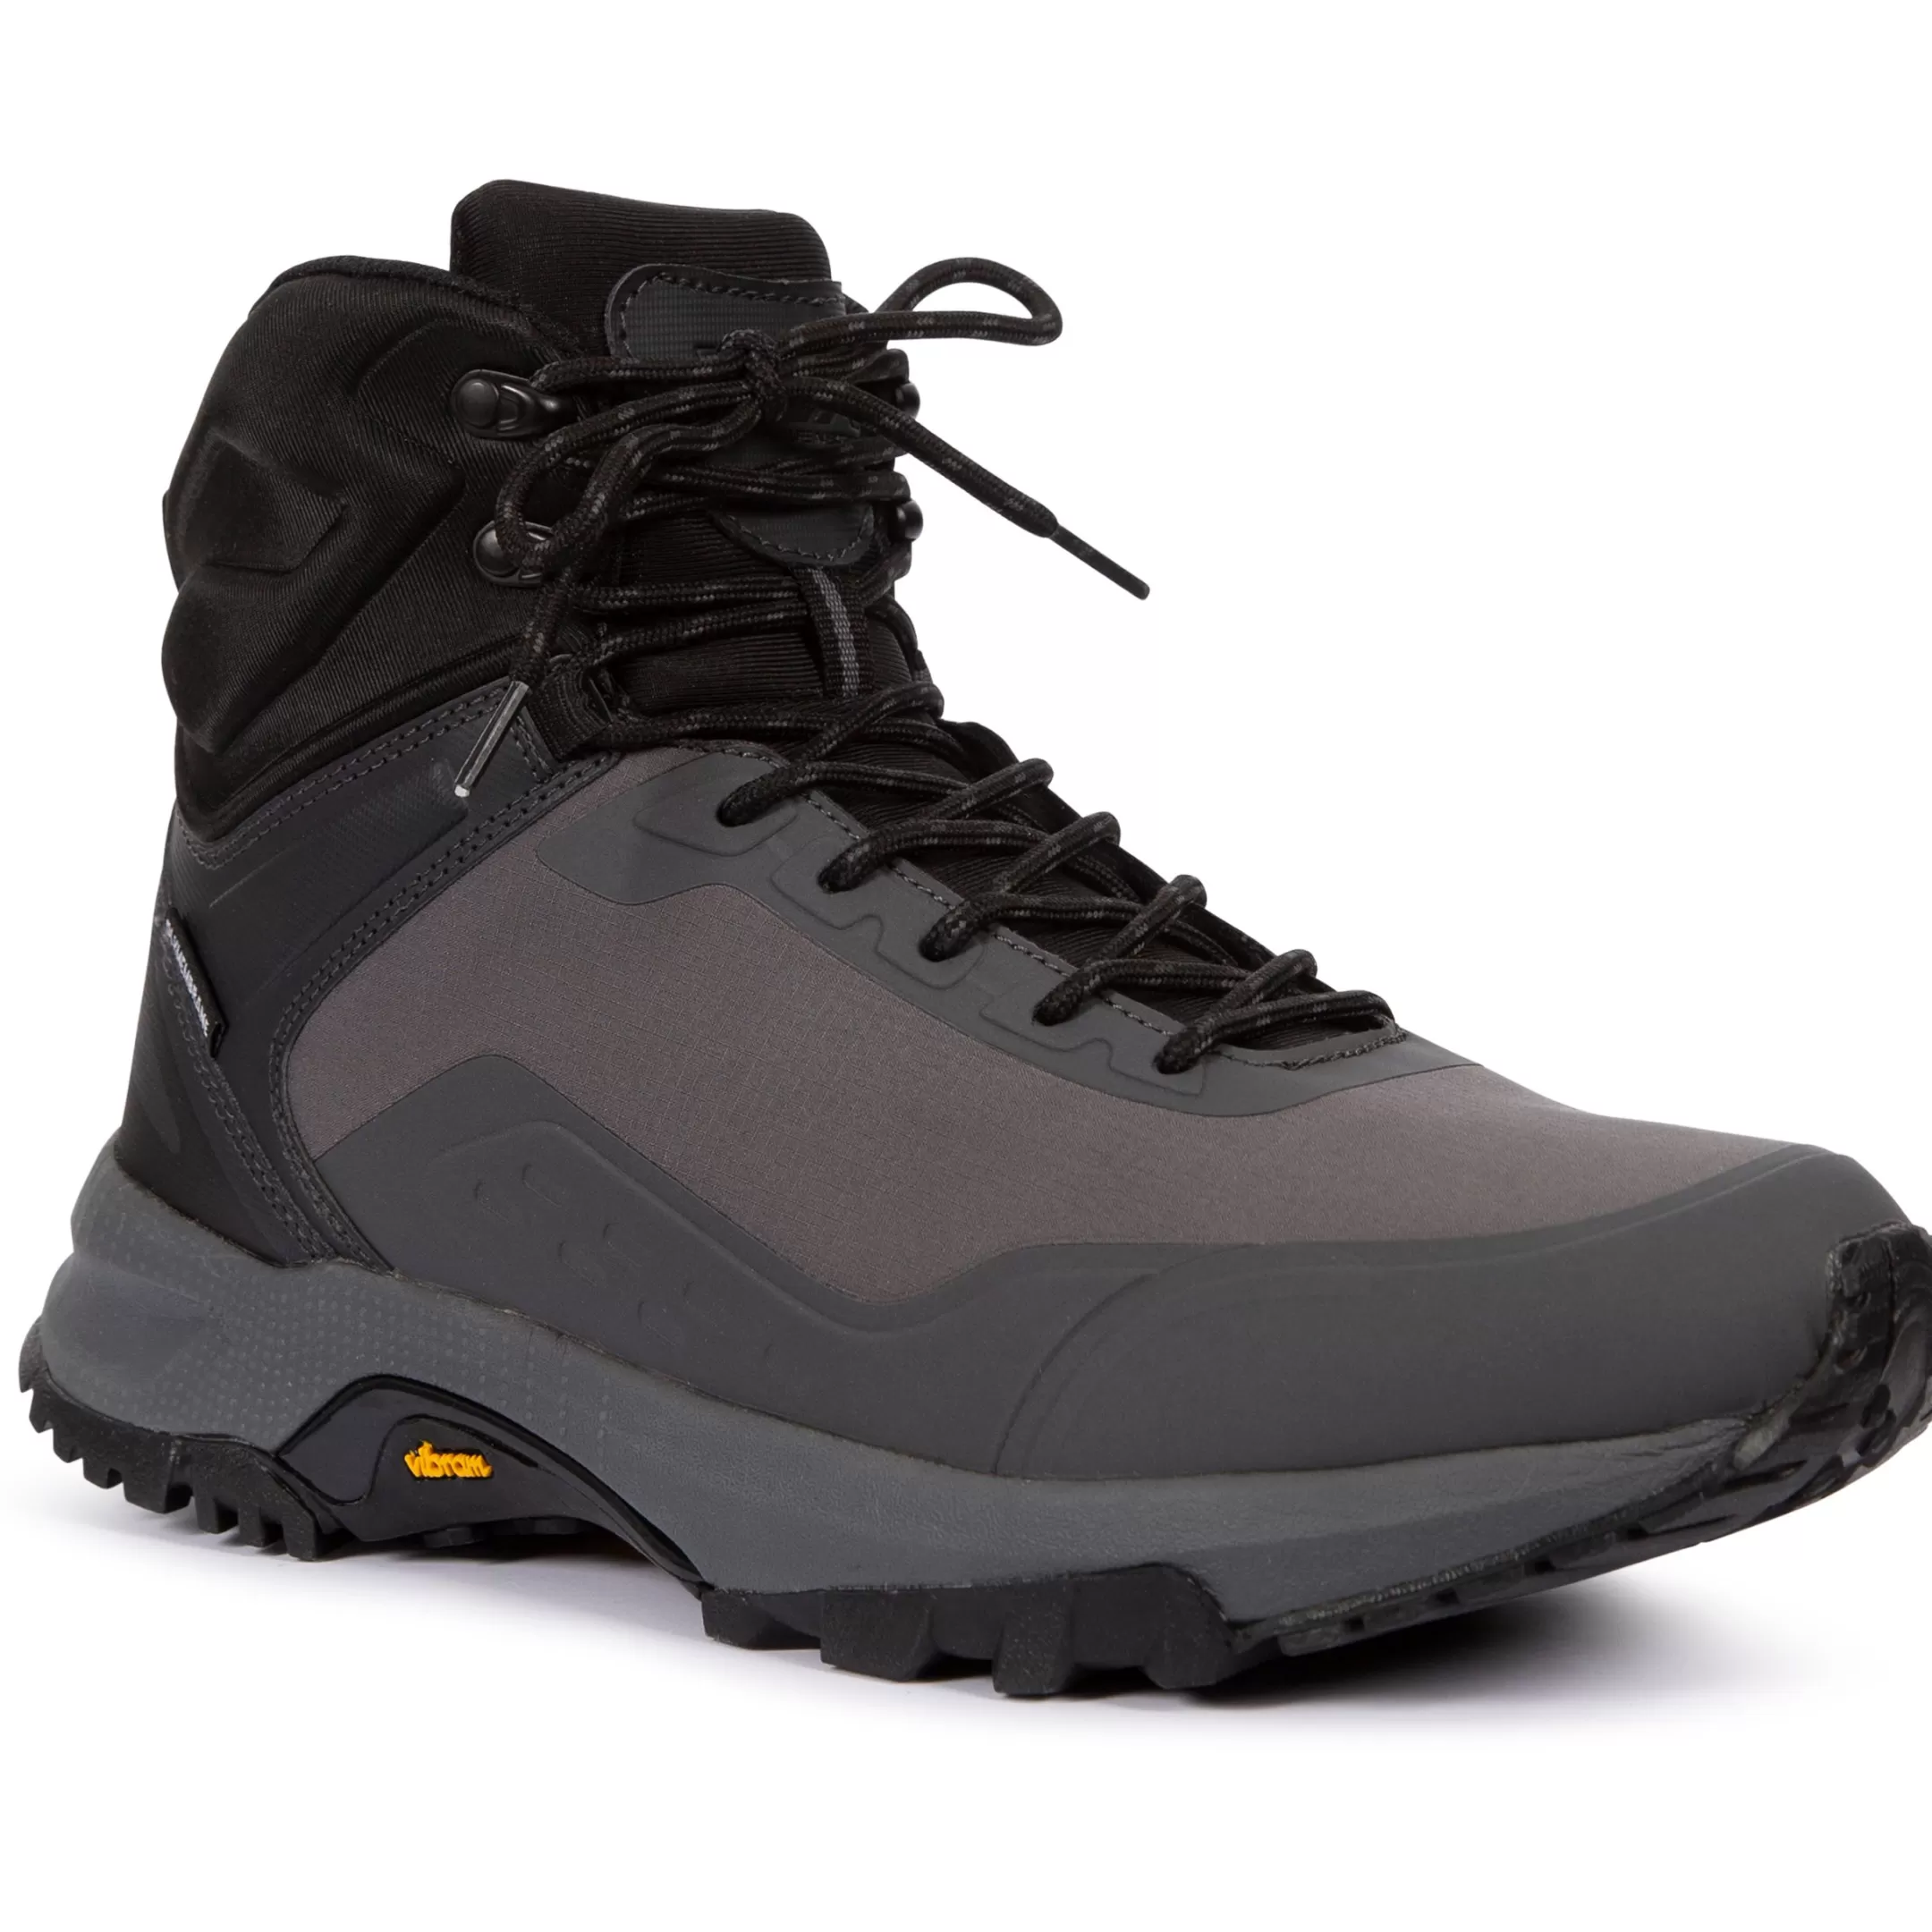 Men's DLX Walking Boots Landen | Trespass Store